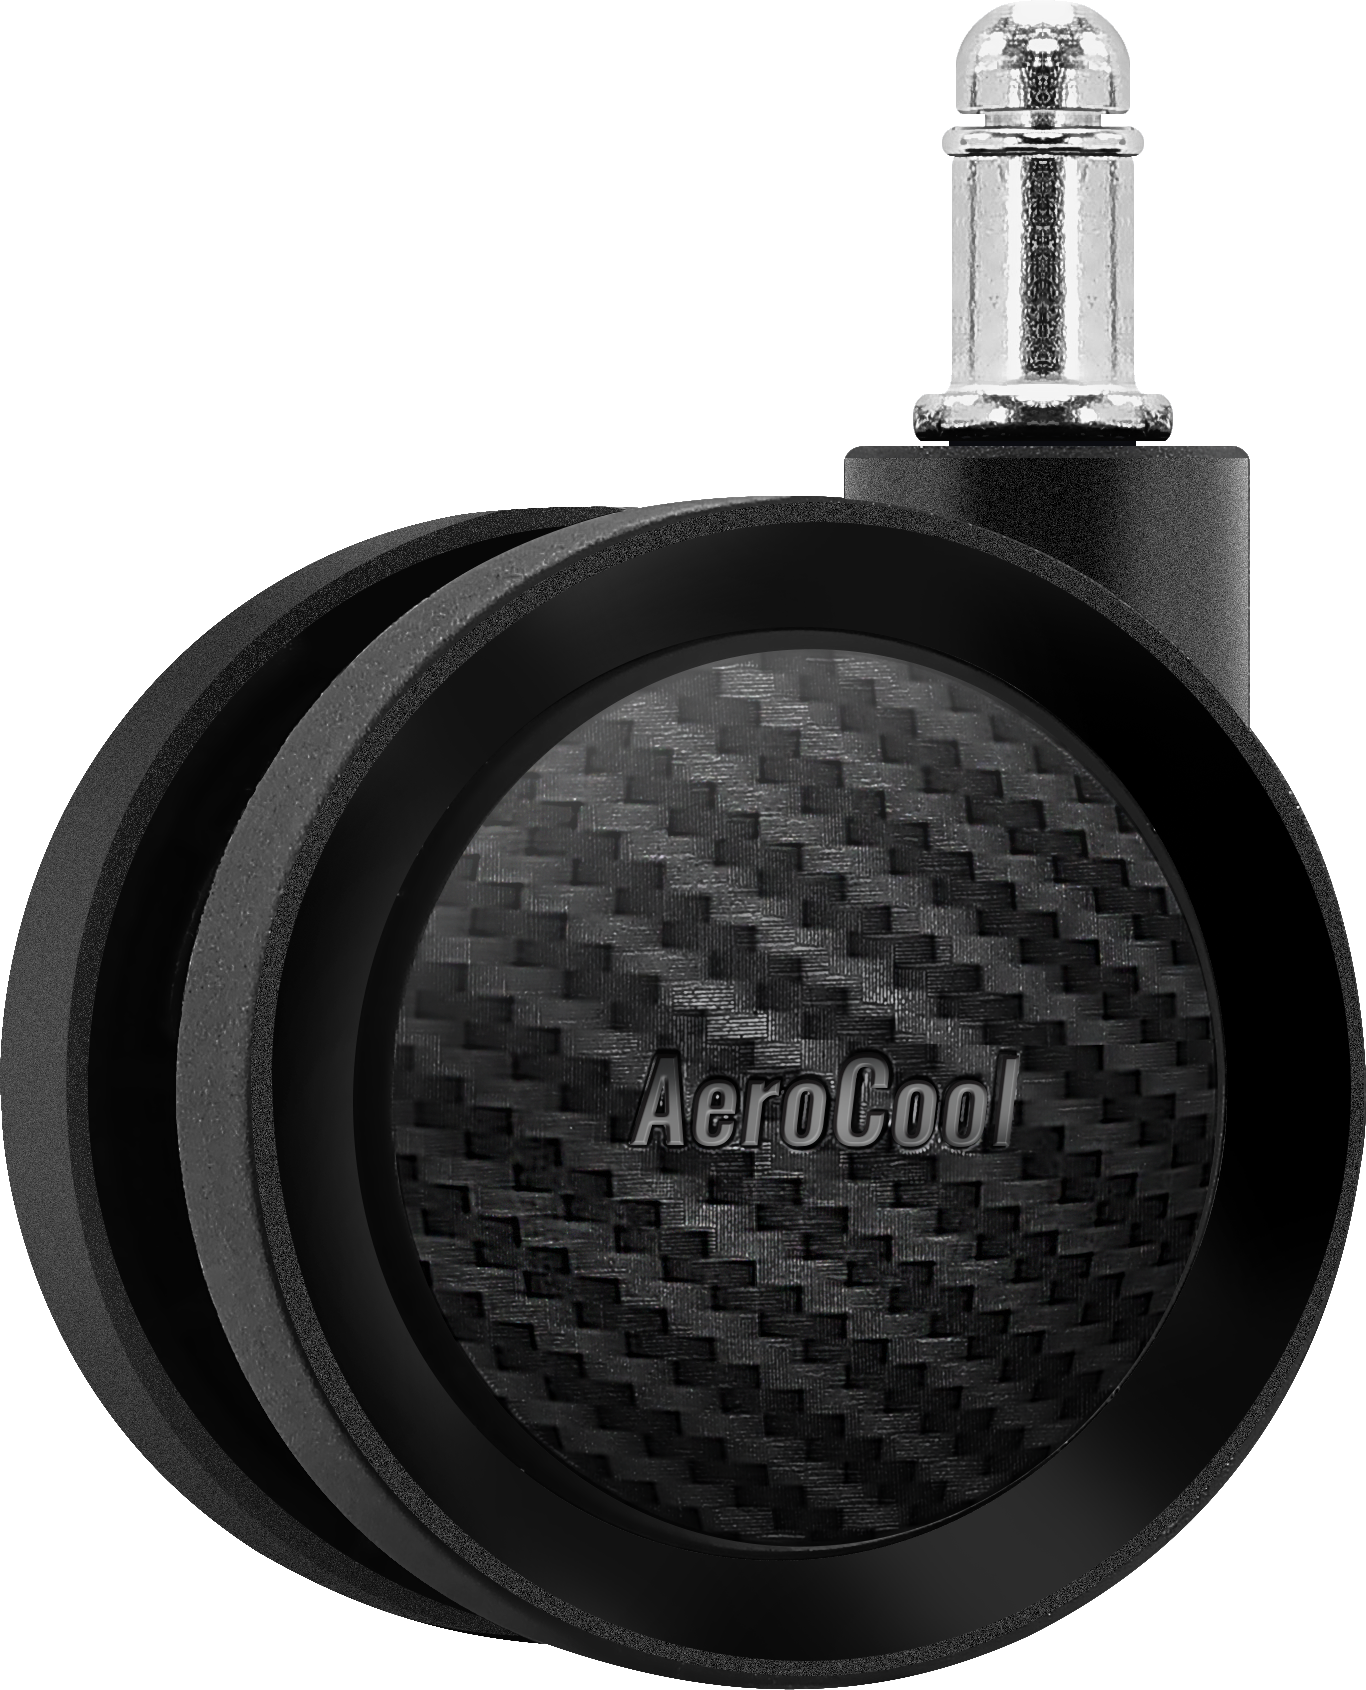 Aerocool - Aerocool Crown Nobility Series Gaming Chair - Black/Red